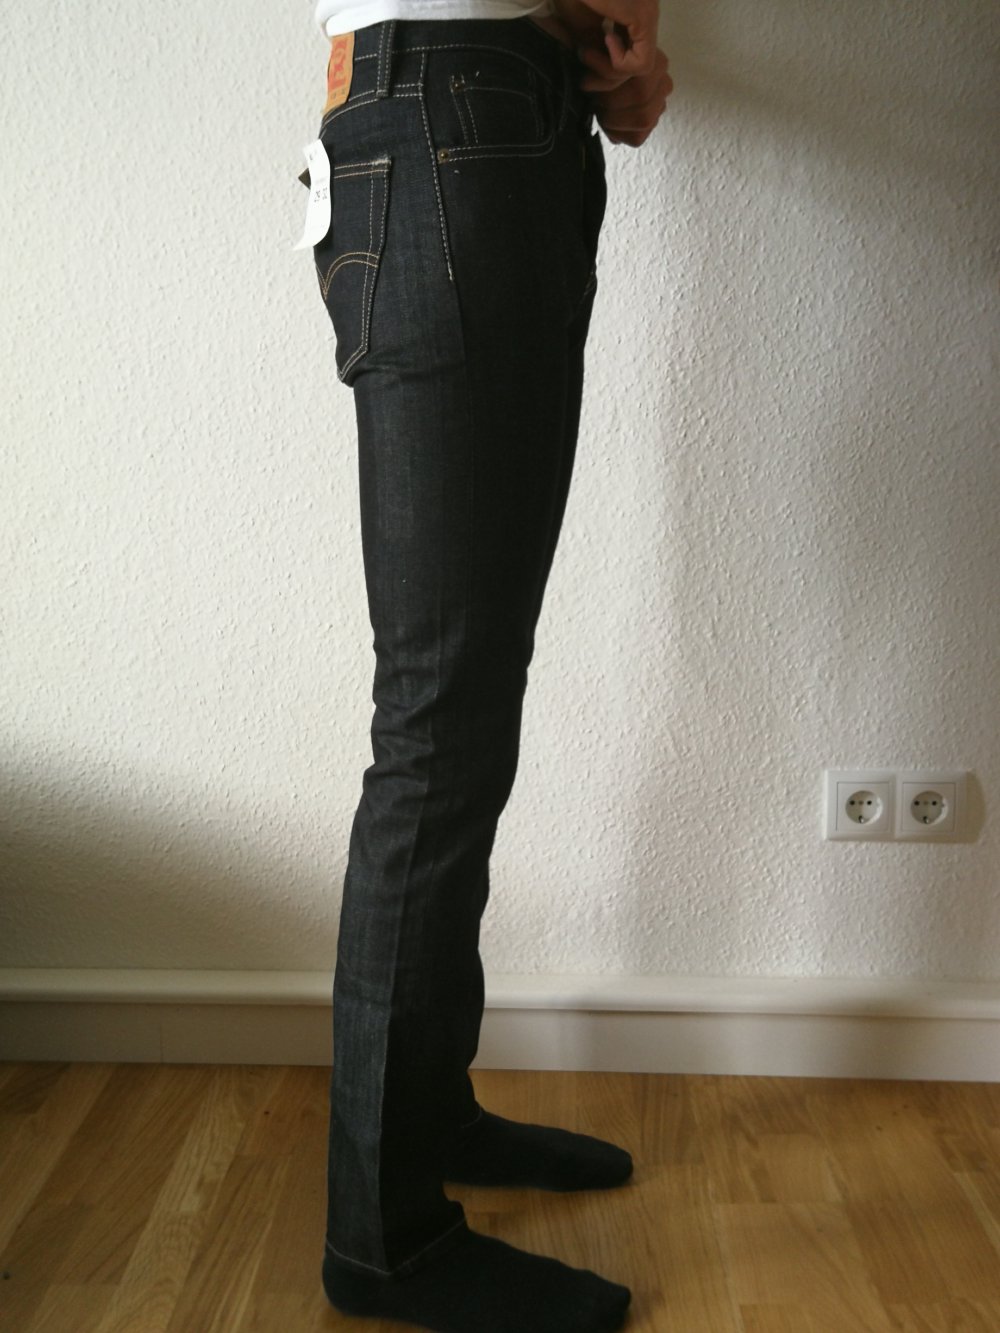 Levi's 510 Skinny Fit Jeans (Herren) in dunkelblau